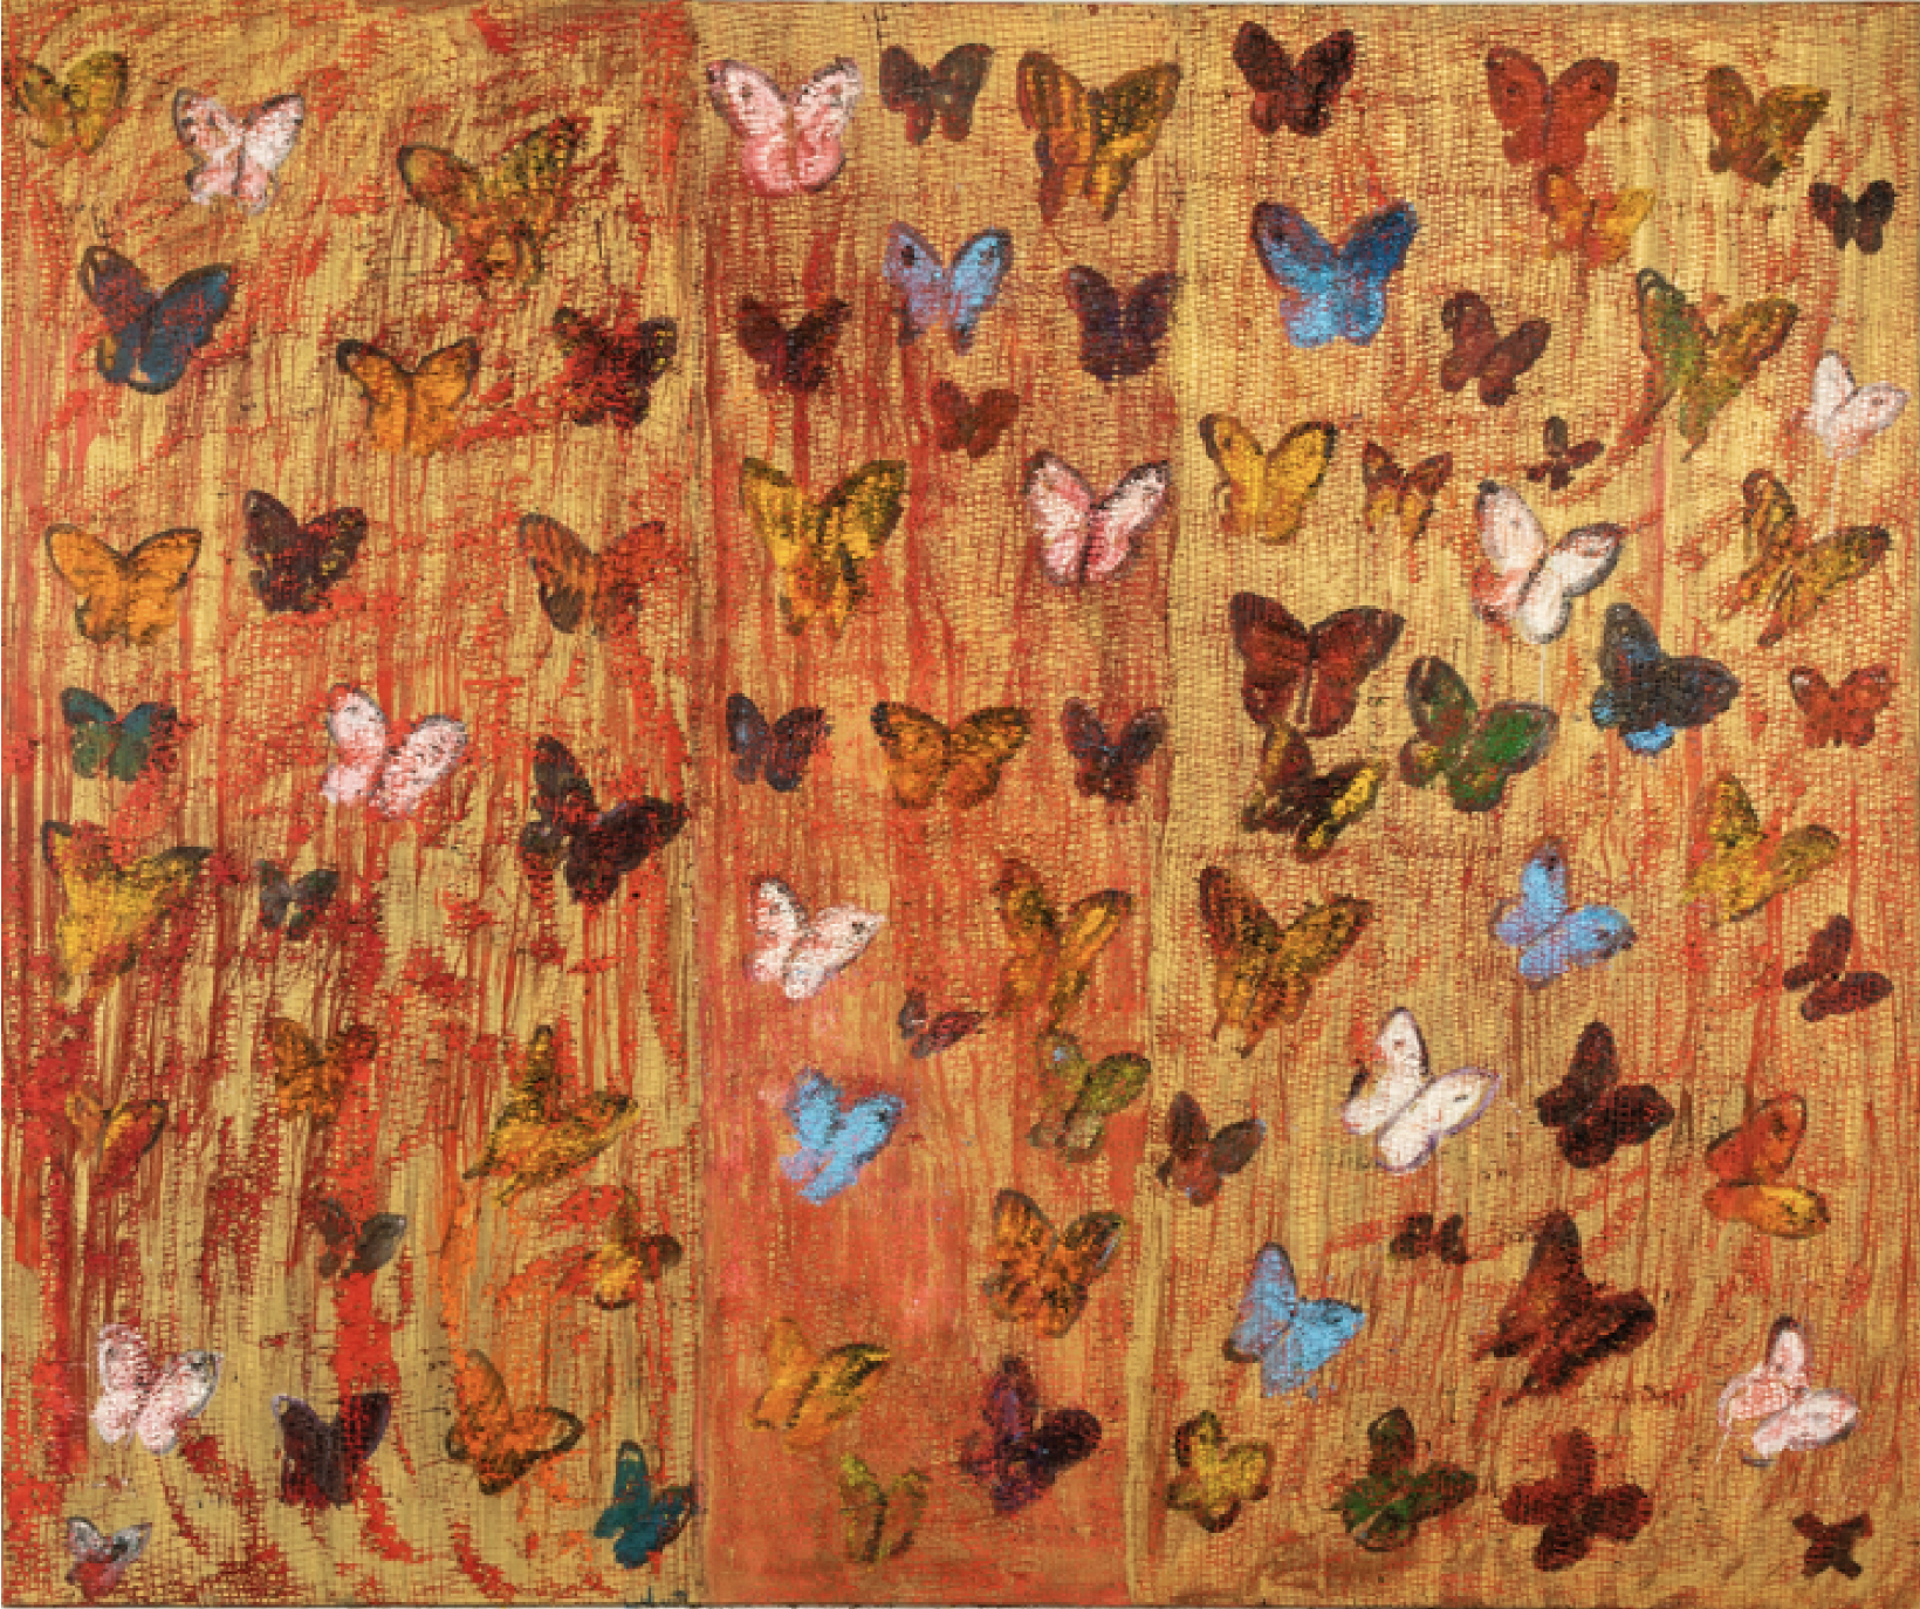 Red Butterflies Bayou Teche by Hunt Slonem